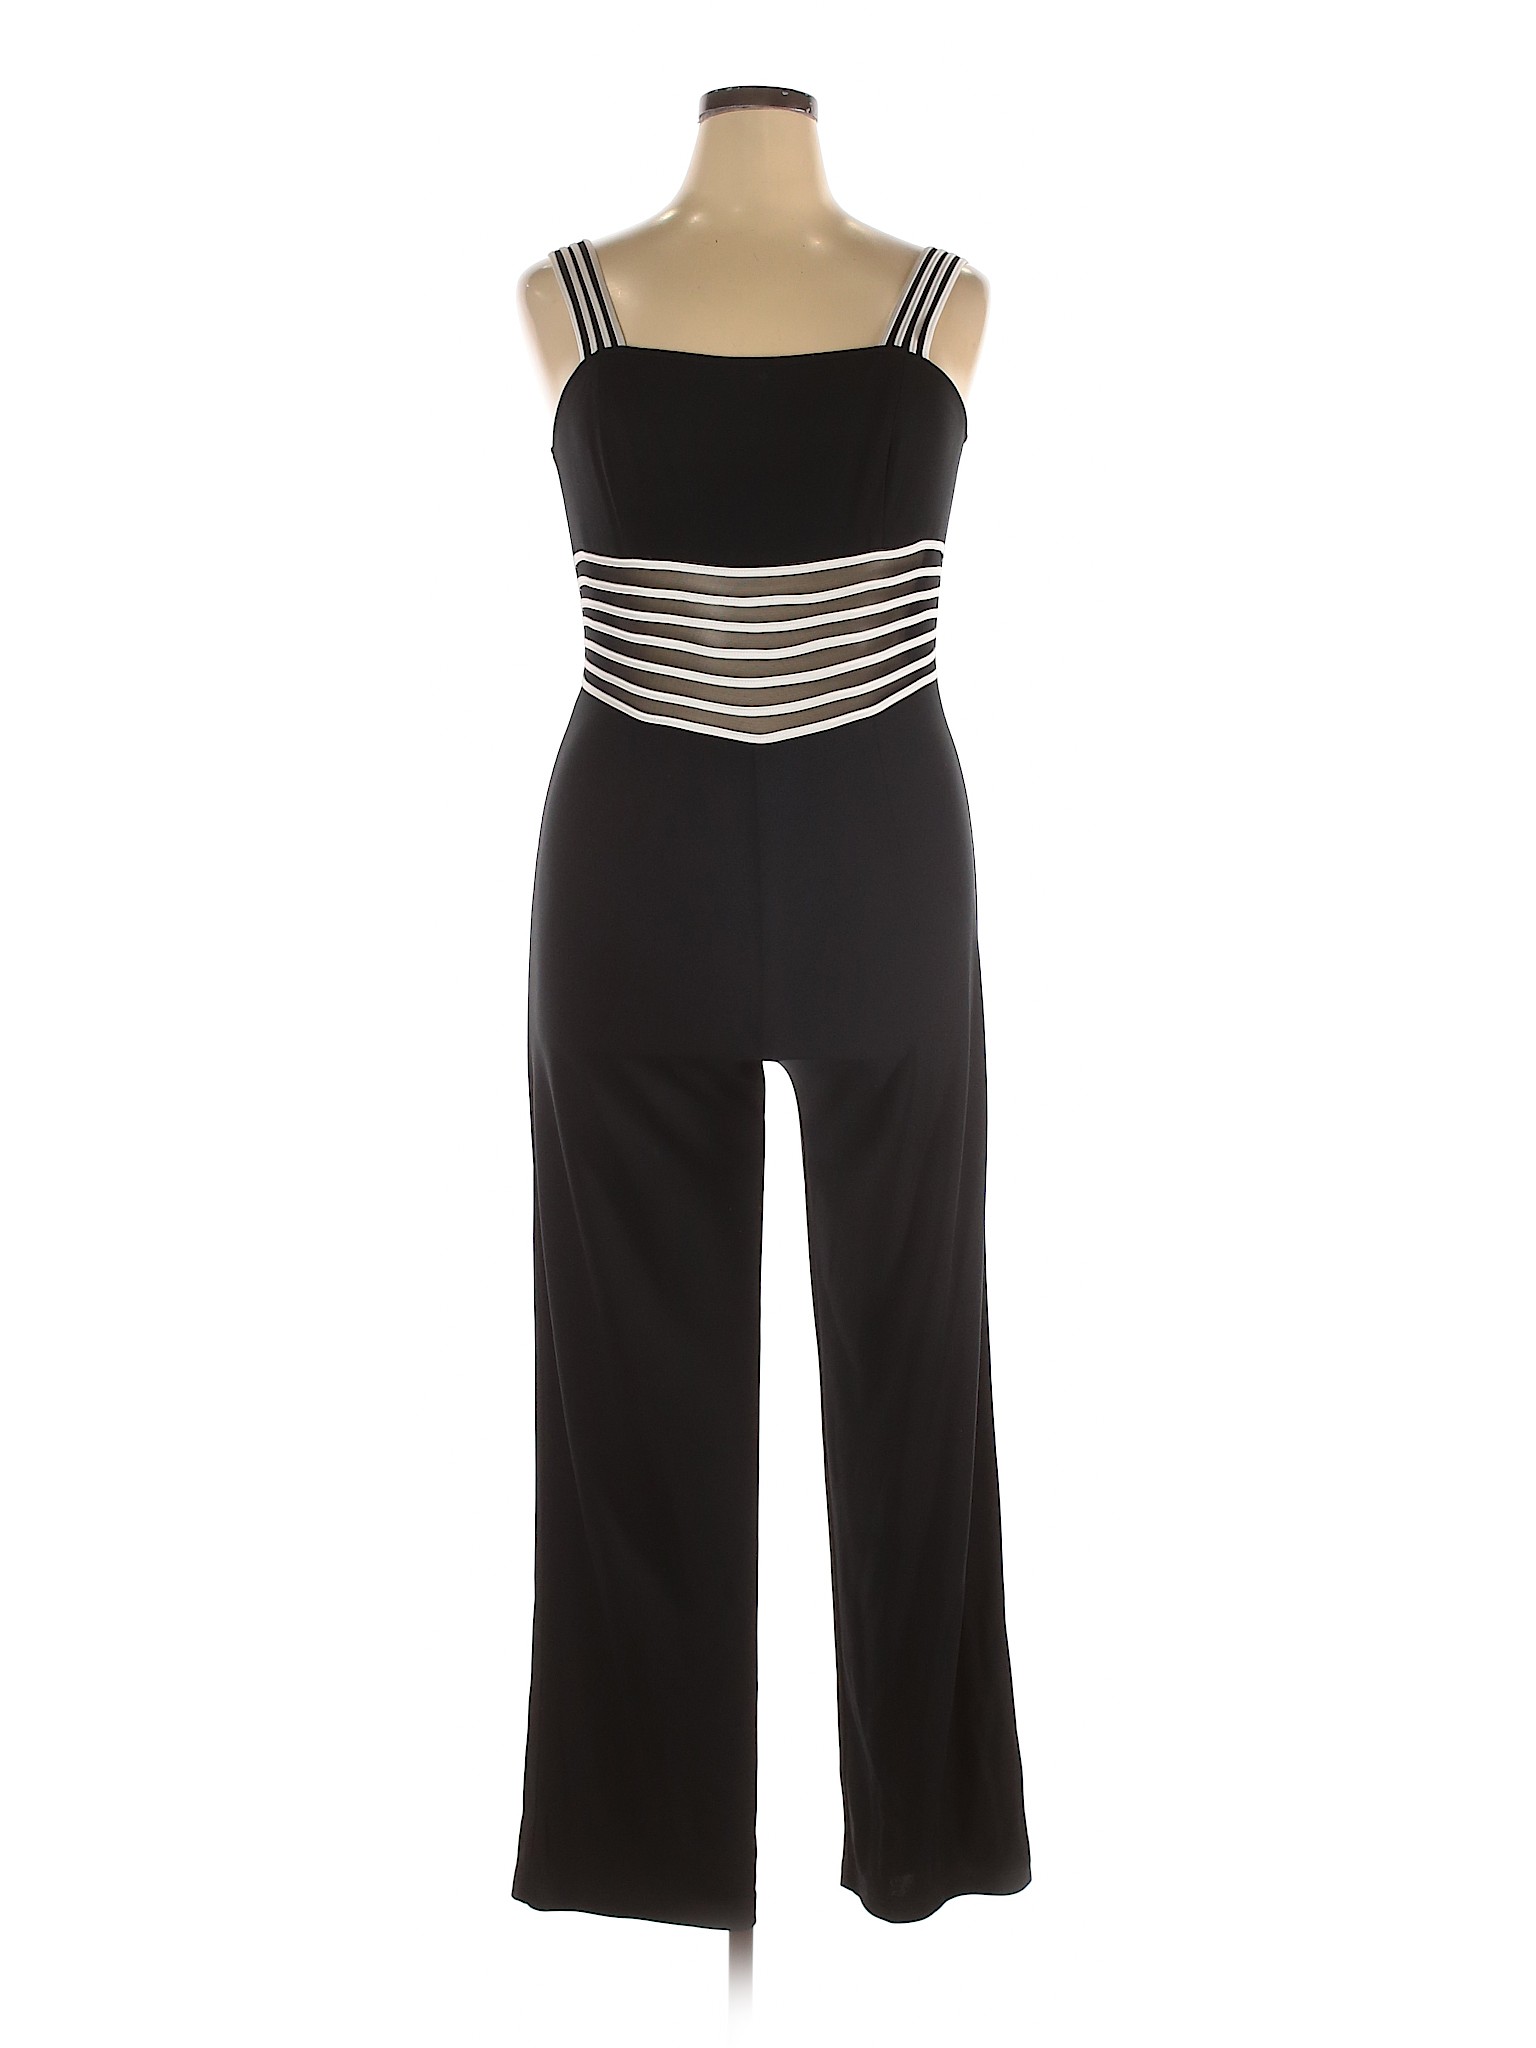 Joseph Ribkoff Stripes Black Jumpsuit Size 16 (UK) - 82% off | thredUP